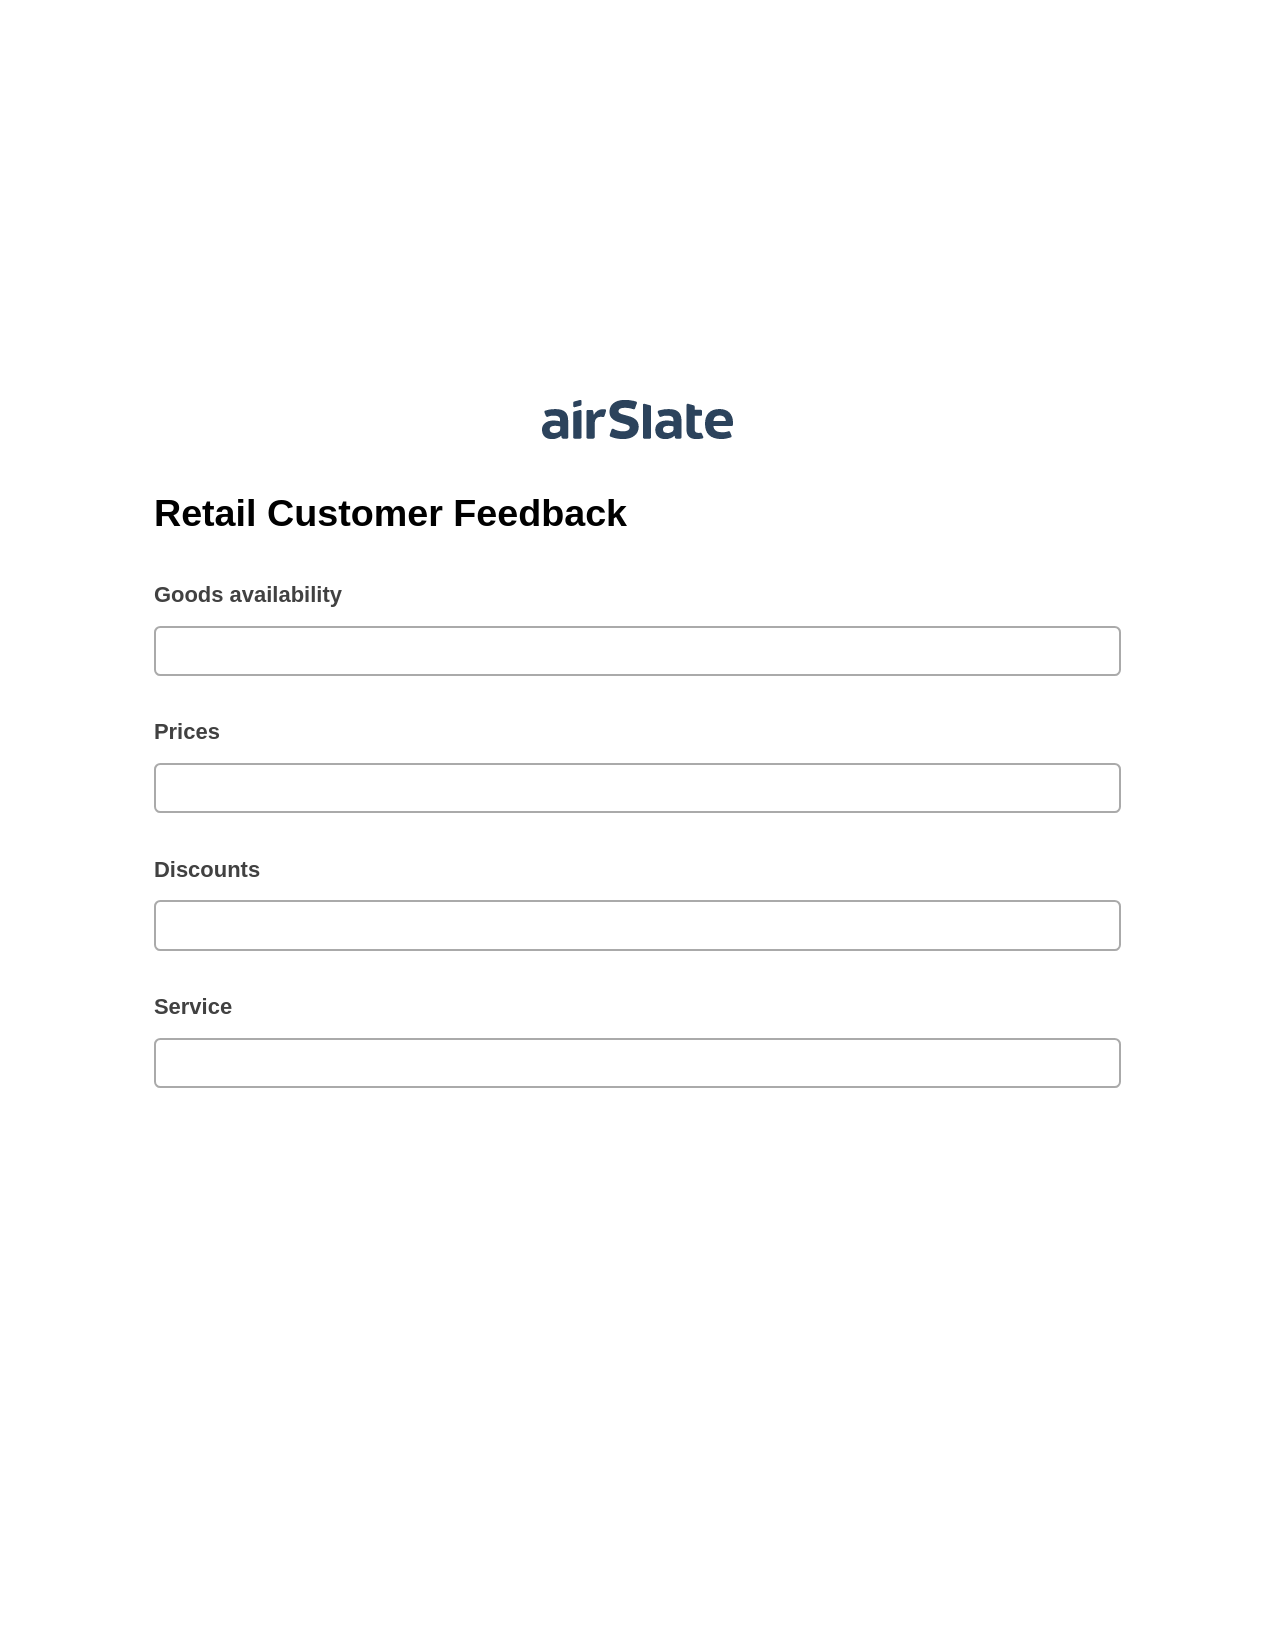 Multirole Retail Customer Feedback Pre-fill Slate from MS Dynamics 365 Records Bot, Reminder Bot, Slack Notification Postfinish Bot